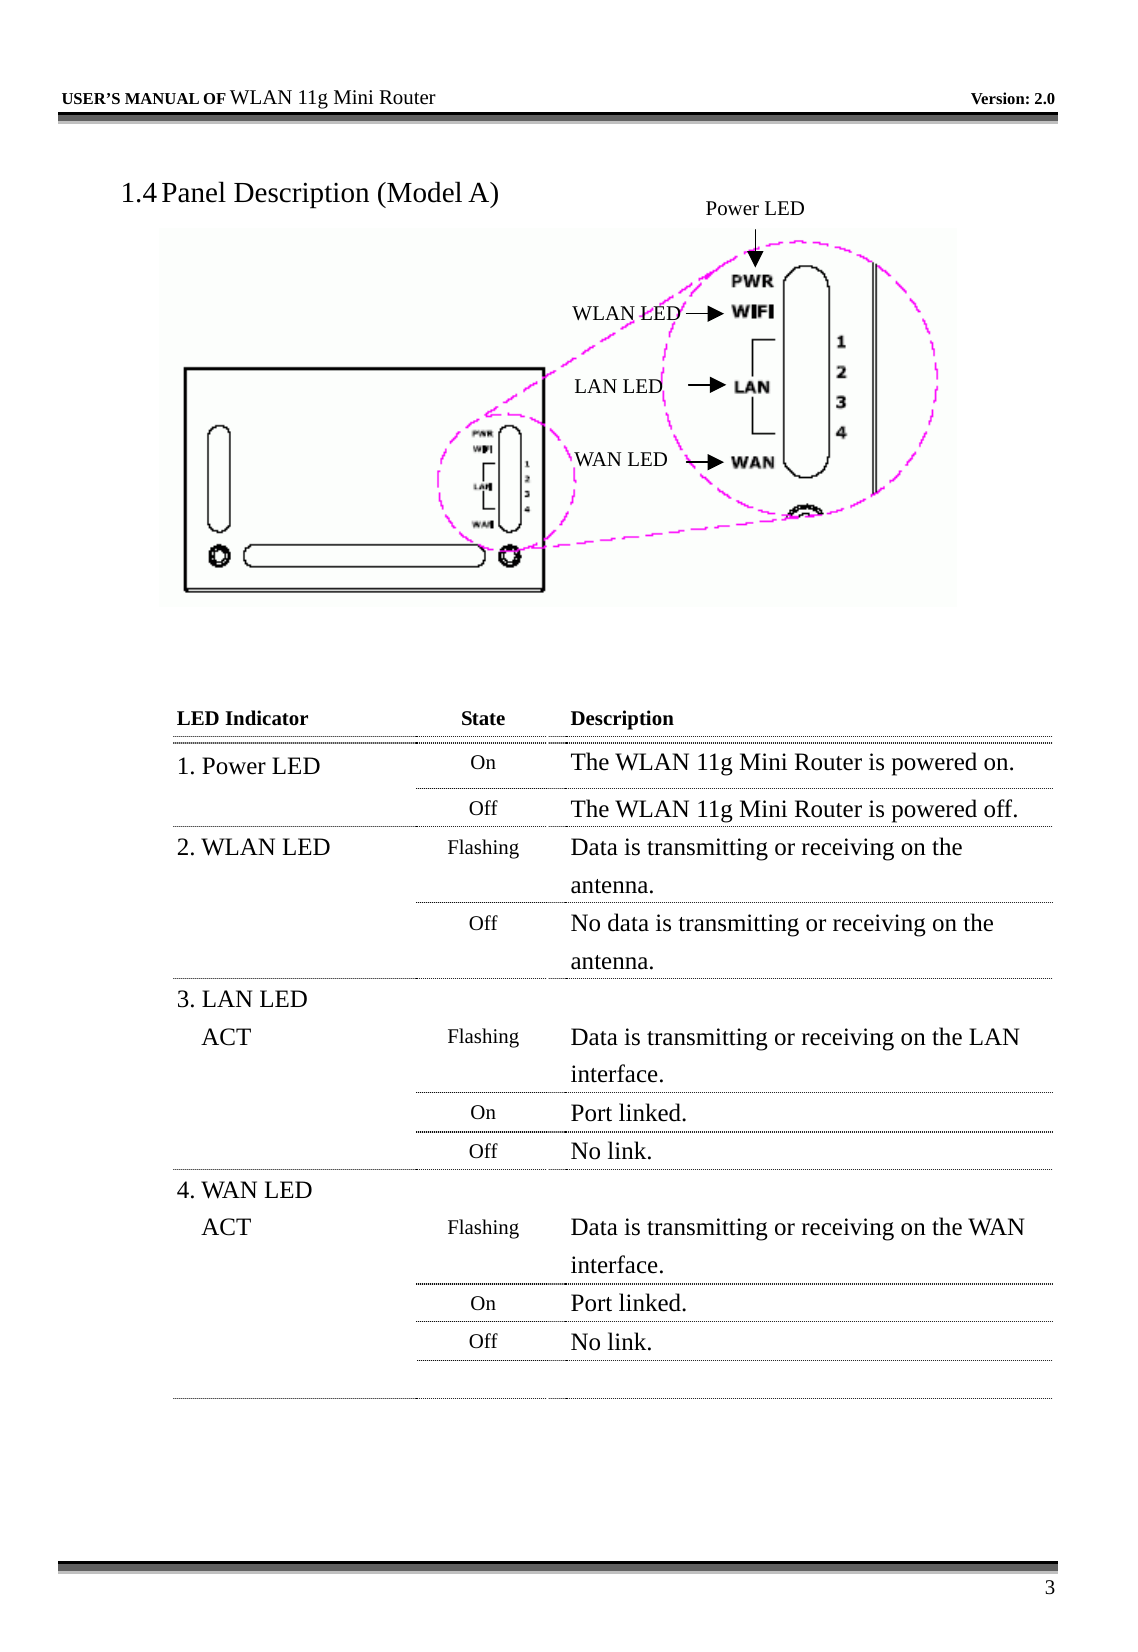   USER’S MANUAL OF WLAN 11g Mini Router   Version: 2.0     3  1.4 Panel Description (Model A)    LED Indicator    State  Description 1. Power LED     On  The WLAN 11g Mini Router is powered on.   Off  The WLAN 11g Mini Router is powered off. 2. WLAN LED   Flashing  Data is transmitting or receiving on the antenna.   Off  No data is transmitting or receiving on the antenna. 3. LAN LED      ACT   Flashing  Data is transmitting or receiving on the LAN interface.   On  Port linked.   Off  No link. 4. WAN LED      ACT   Flashing  Data is transmitting or receiving on the WAN interface.   On  Port linked.   Off  No link.      Power LEDWLAN LEDLAN LED WAN LED